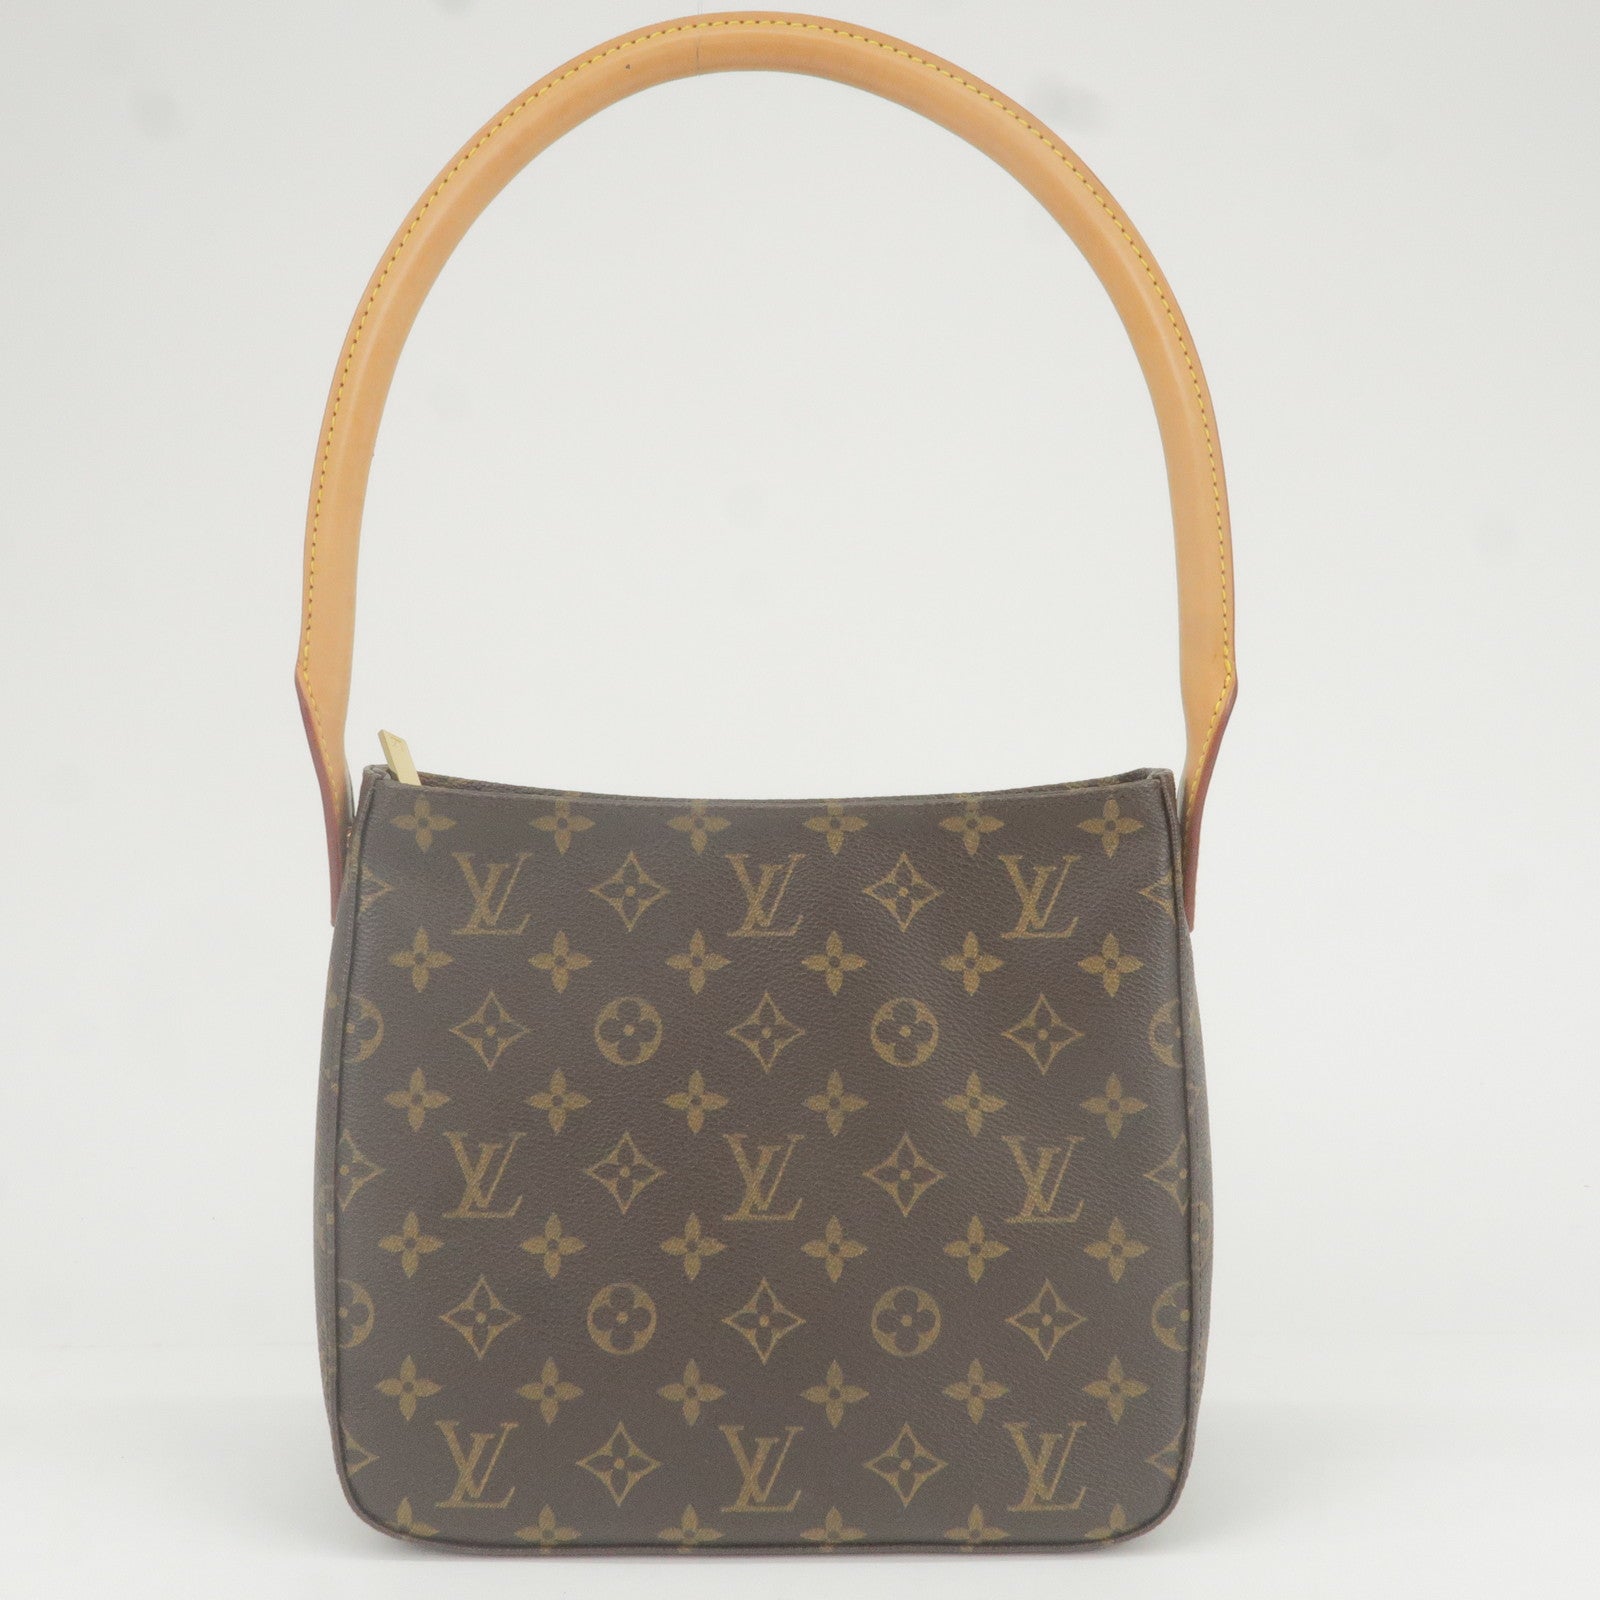 Louis Vuitton Petite Boite Chapeau Bag #fashion#popular#Louis Vuitton#bag#style